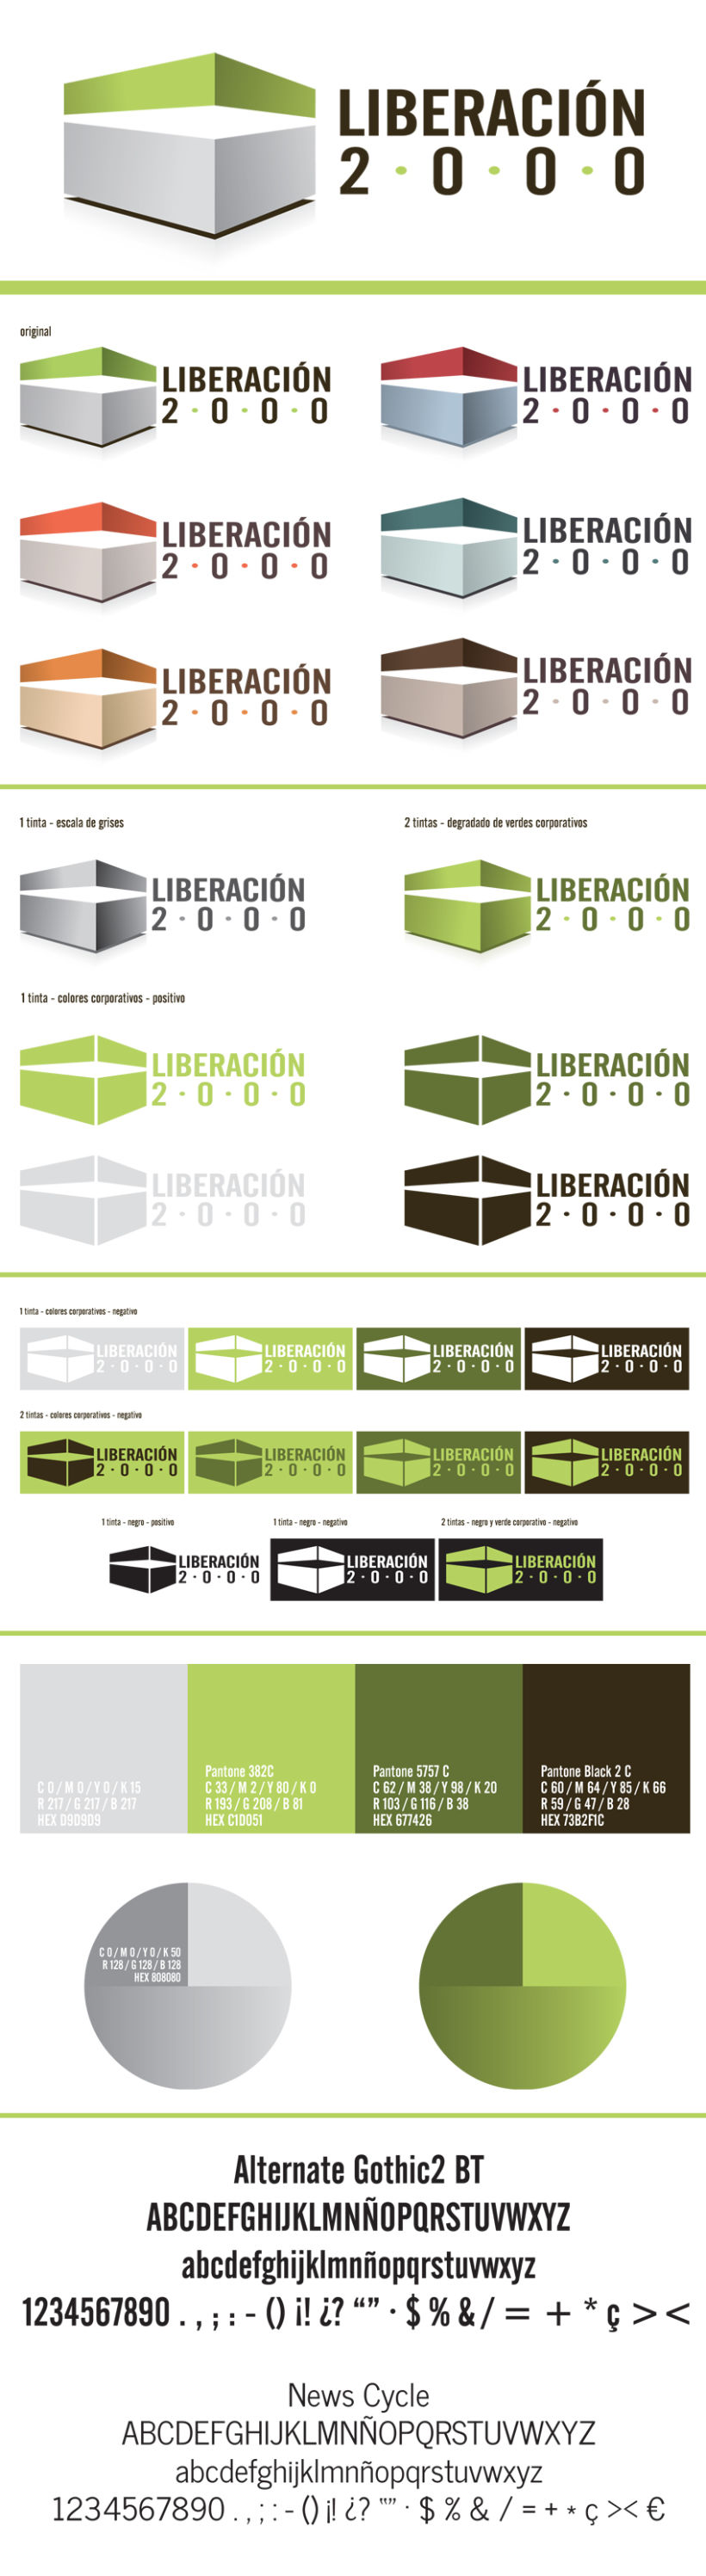 Liberación 2000 - Imagen Corporativa (2013) 1